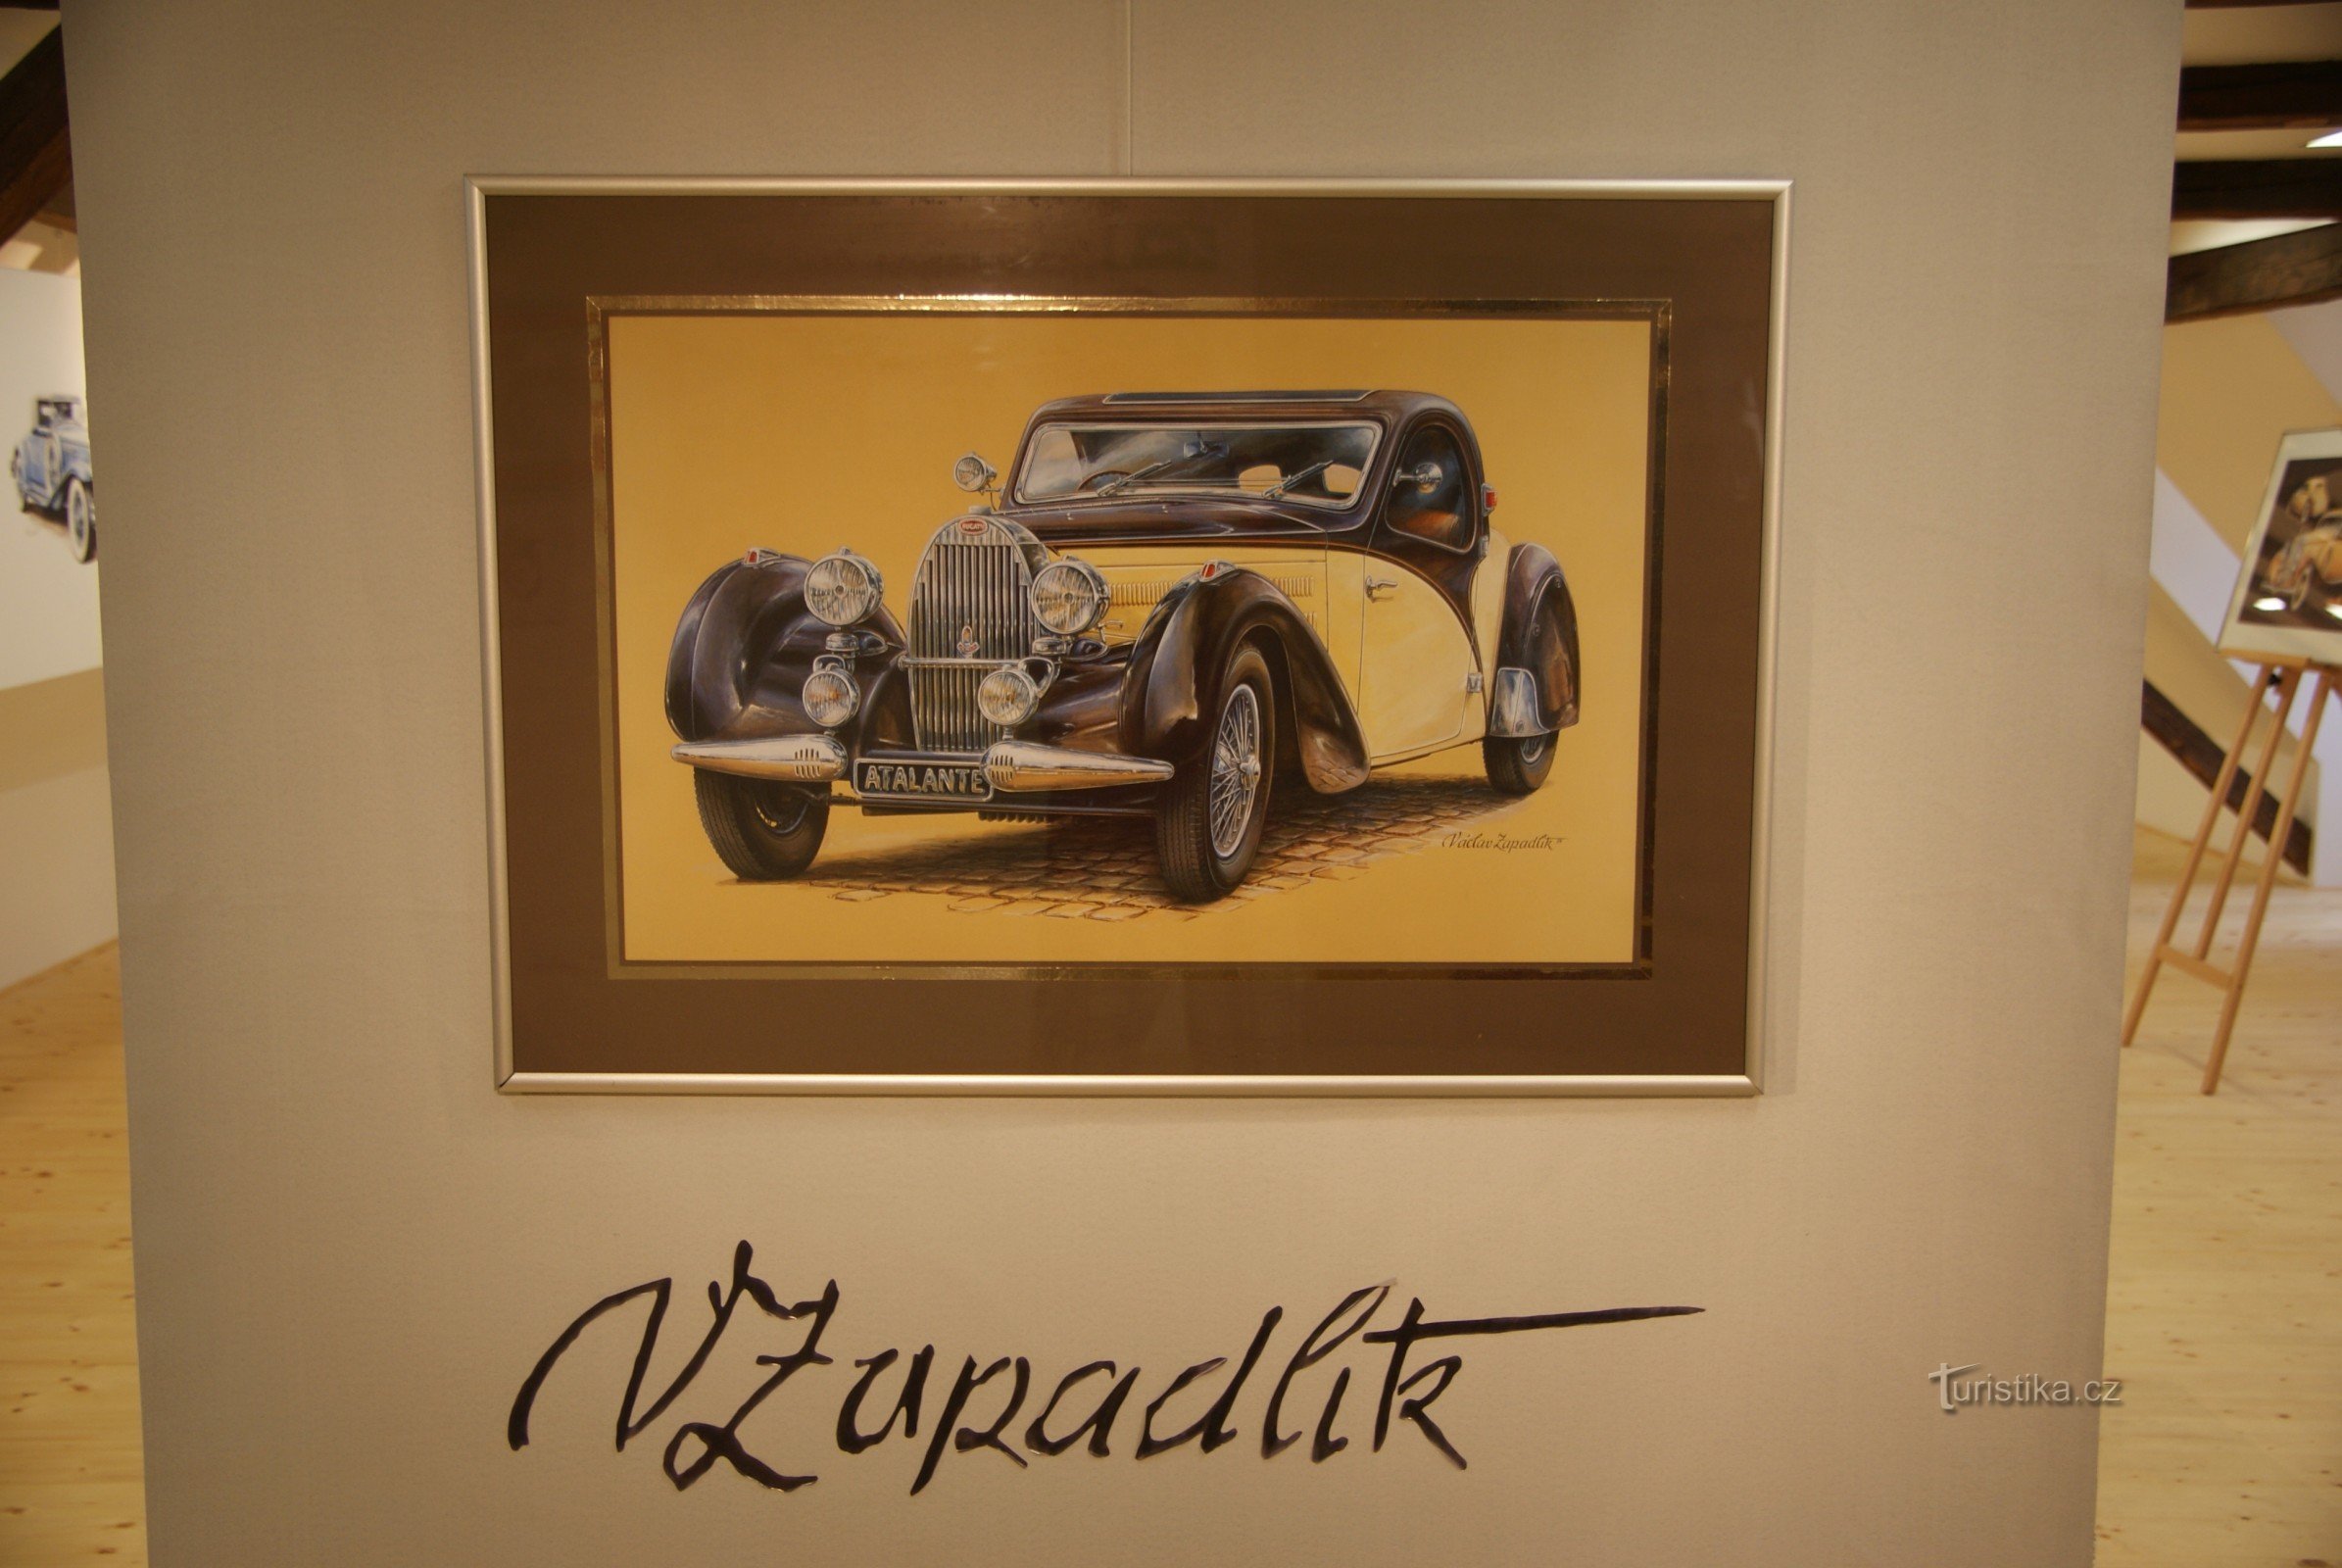 Václav Zapadlík による展覧会「自動車の世界のイメージ」